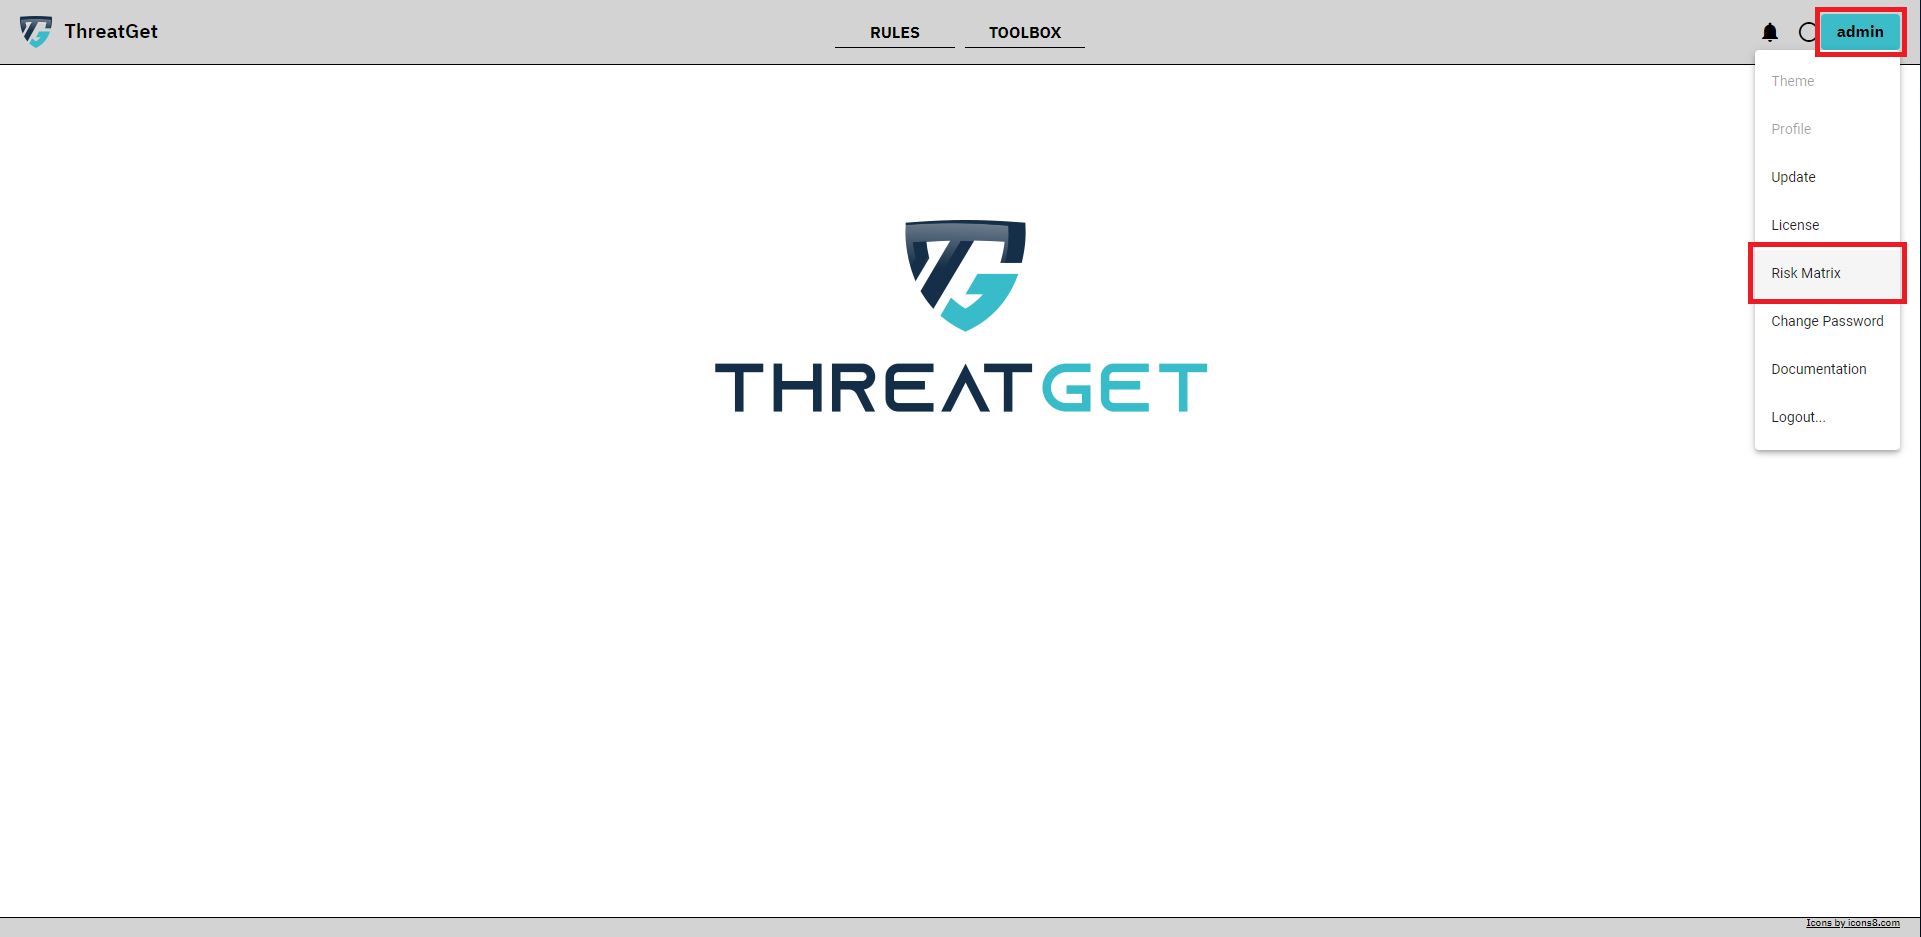 ThreatGet risk matrix navigation